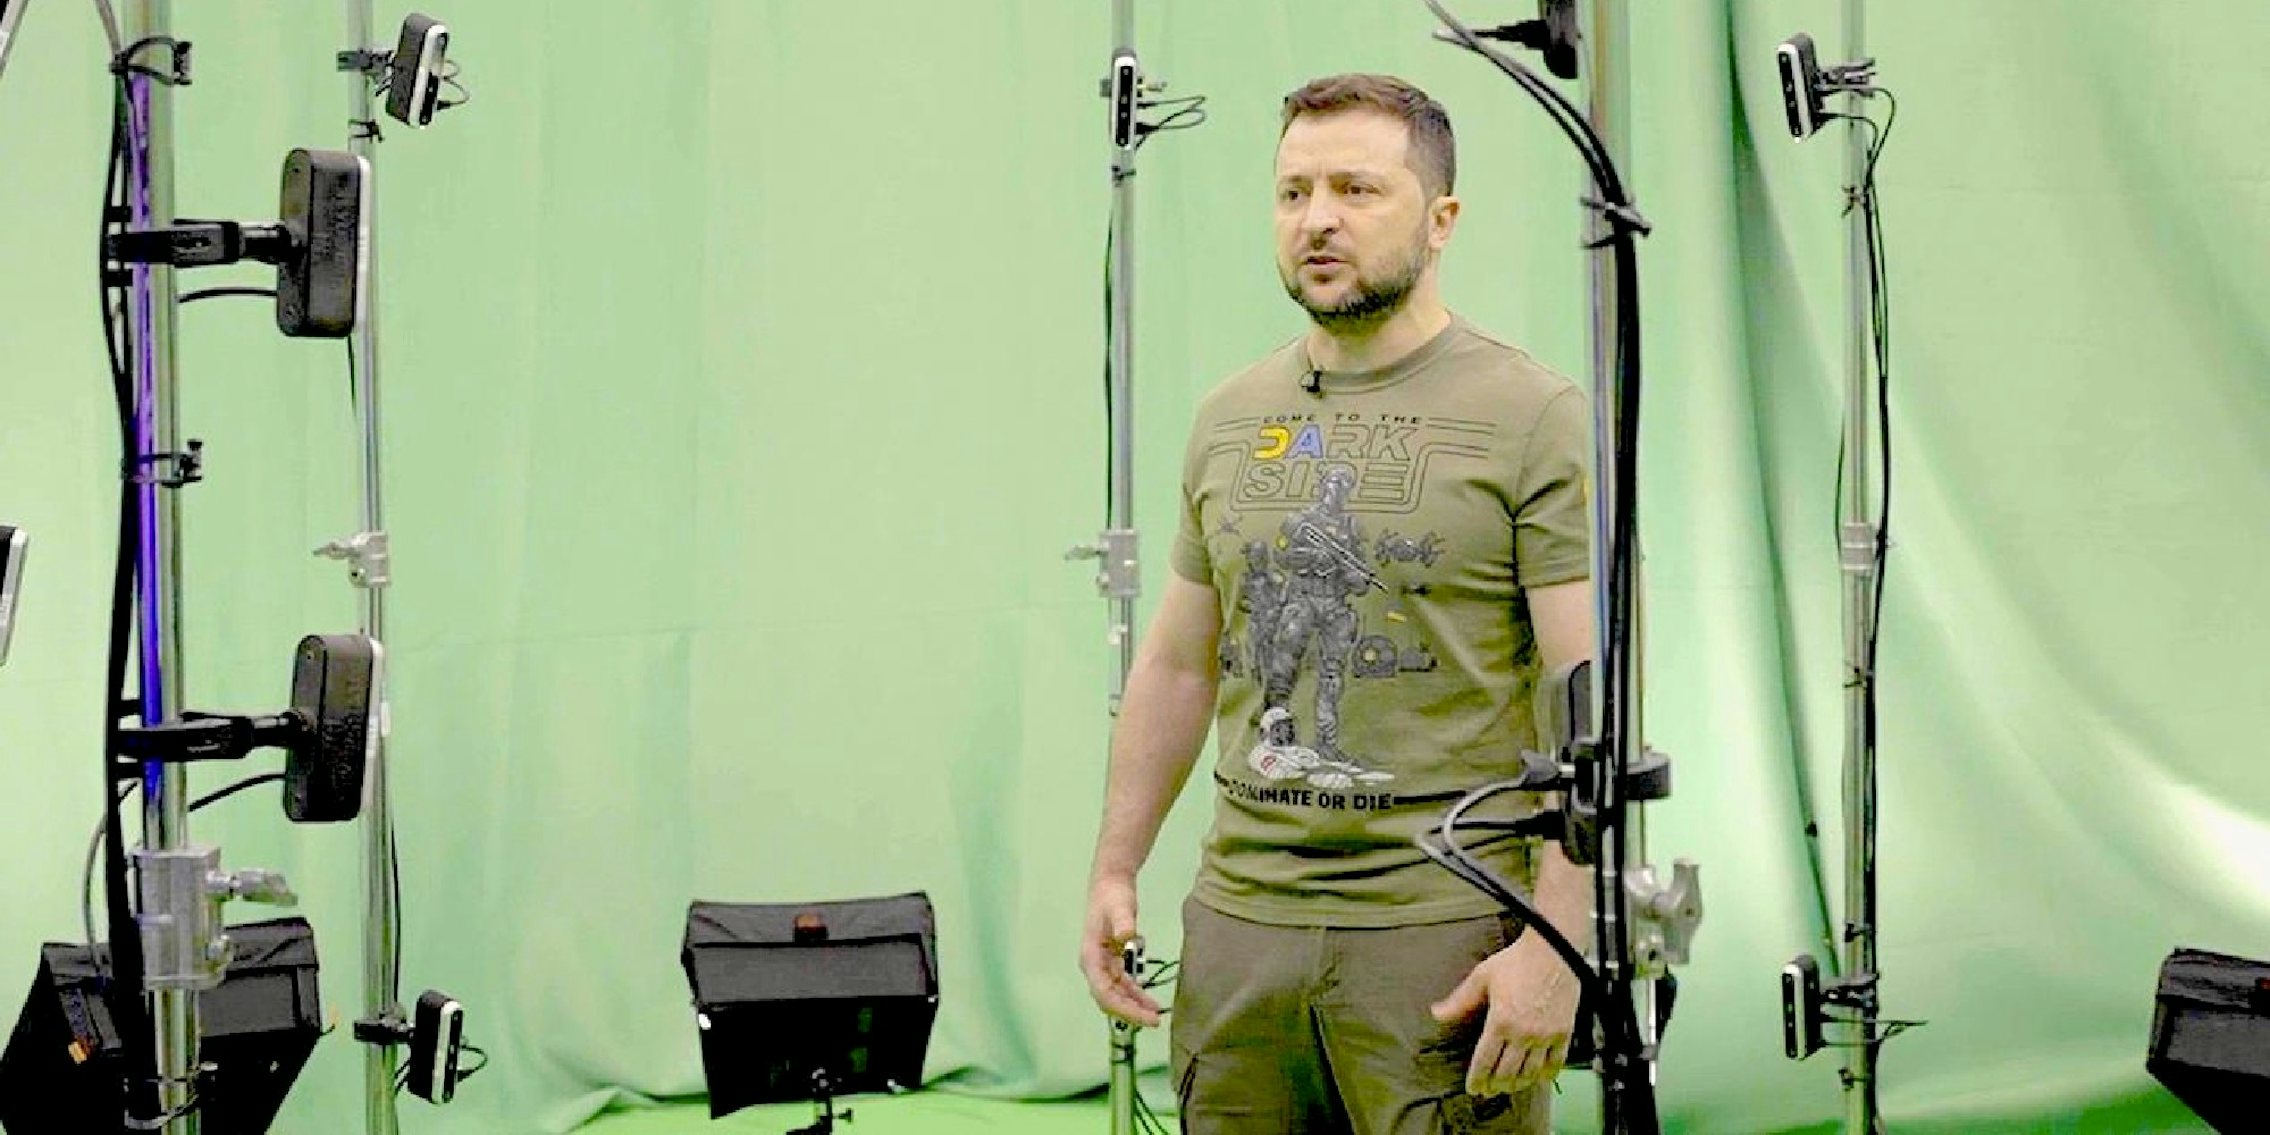 Ukrainian President Volodymyr Zelenskyy standing in front of a green screen